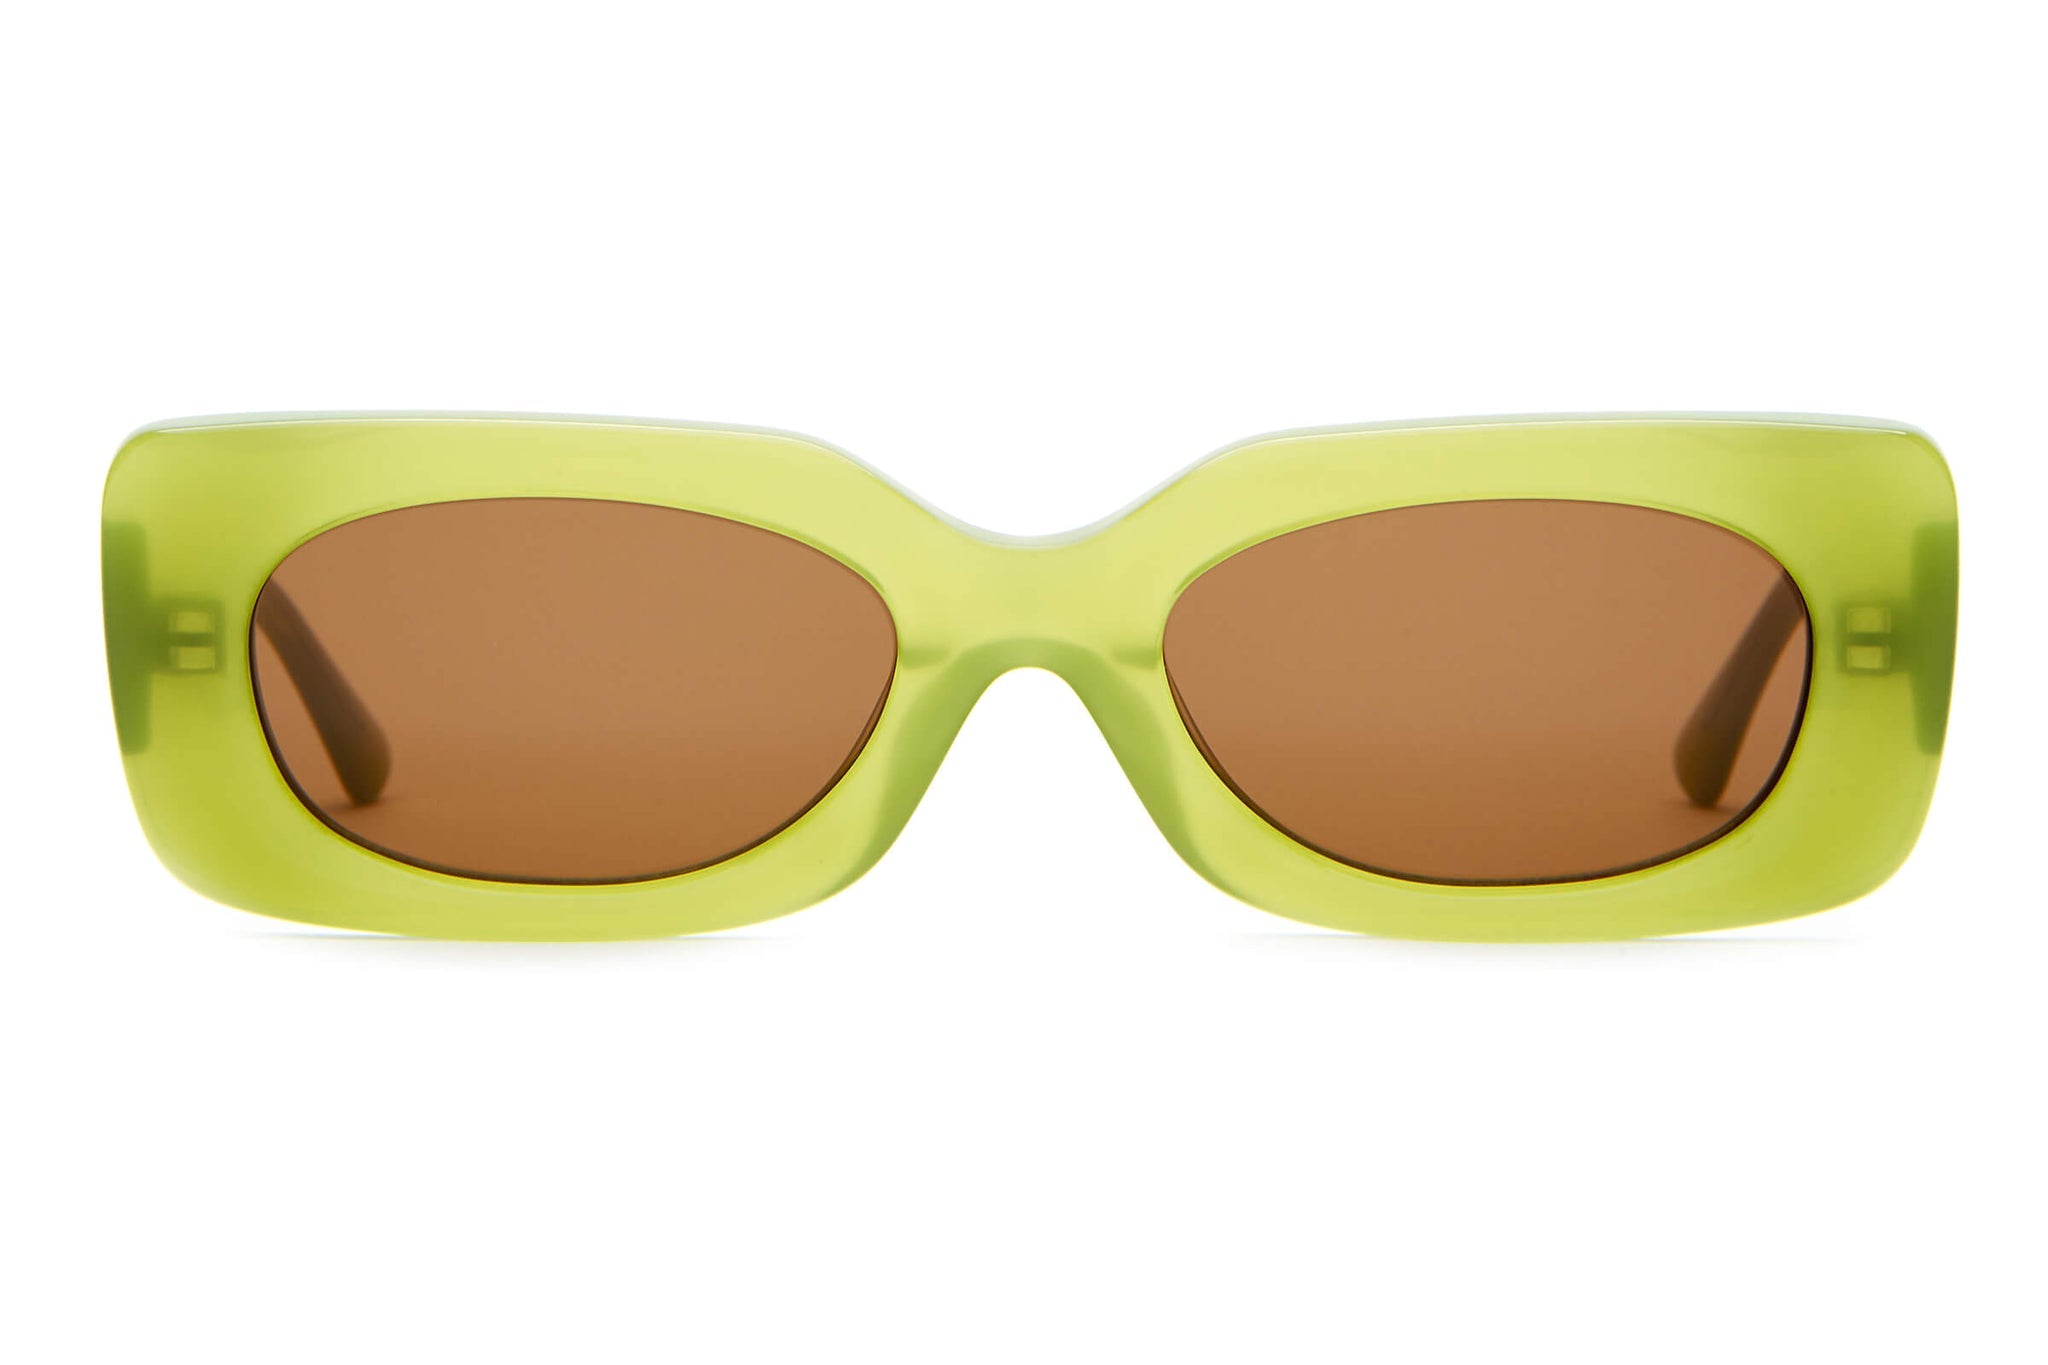 The Super Phreek Sunglasses in Kiwi Bio Green